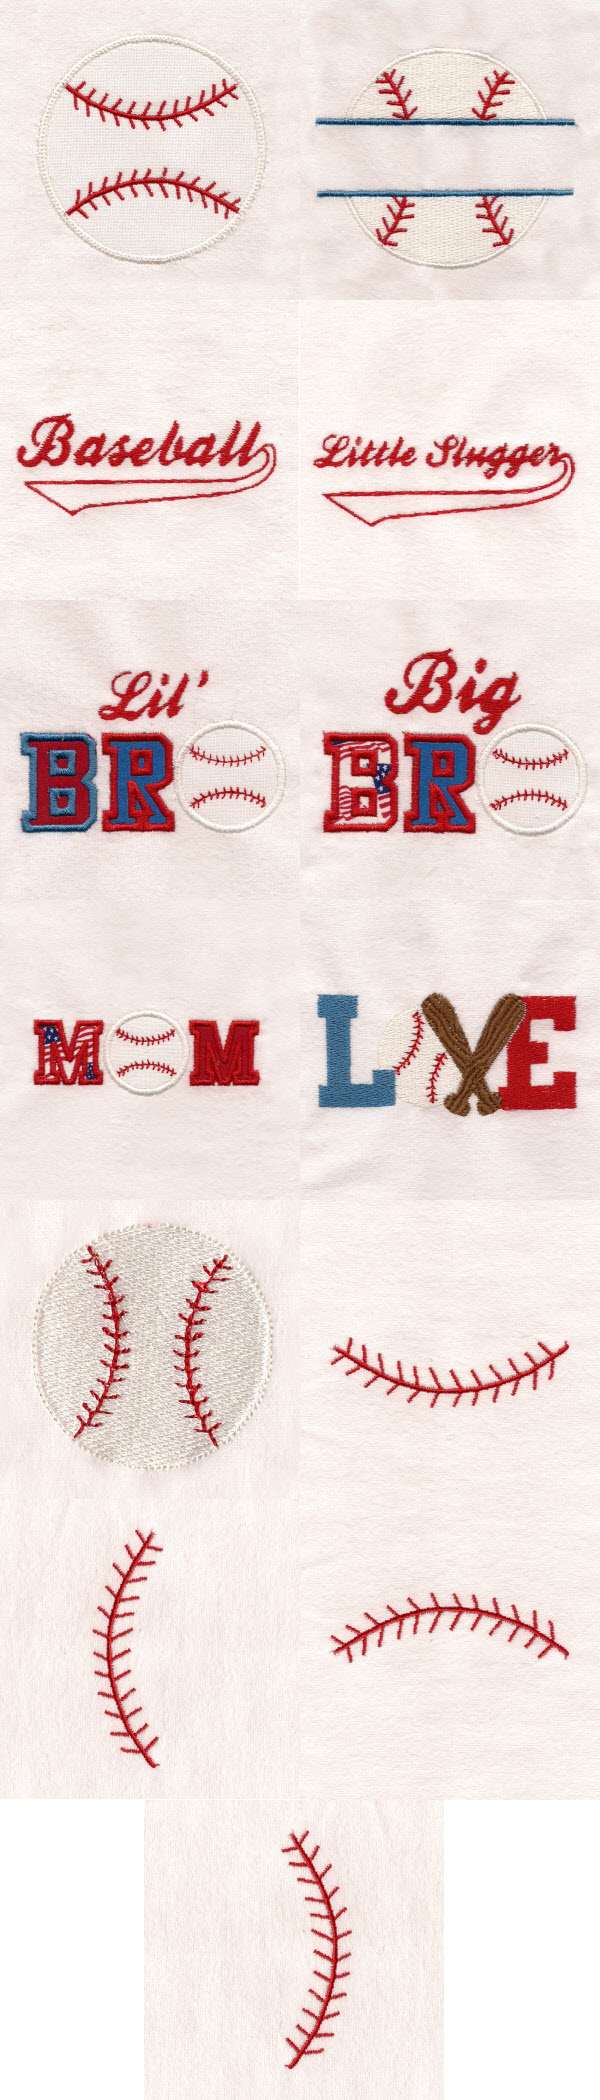 Spring Baseball Fun Embroidery Machine Design Details